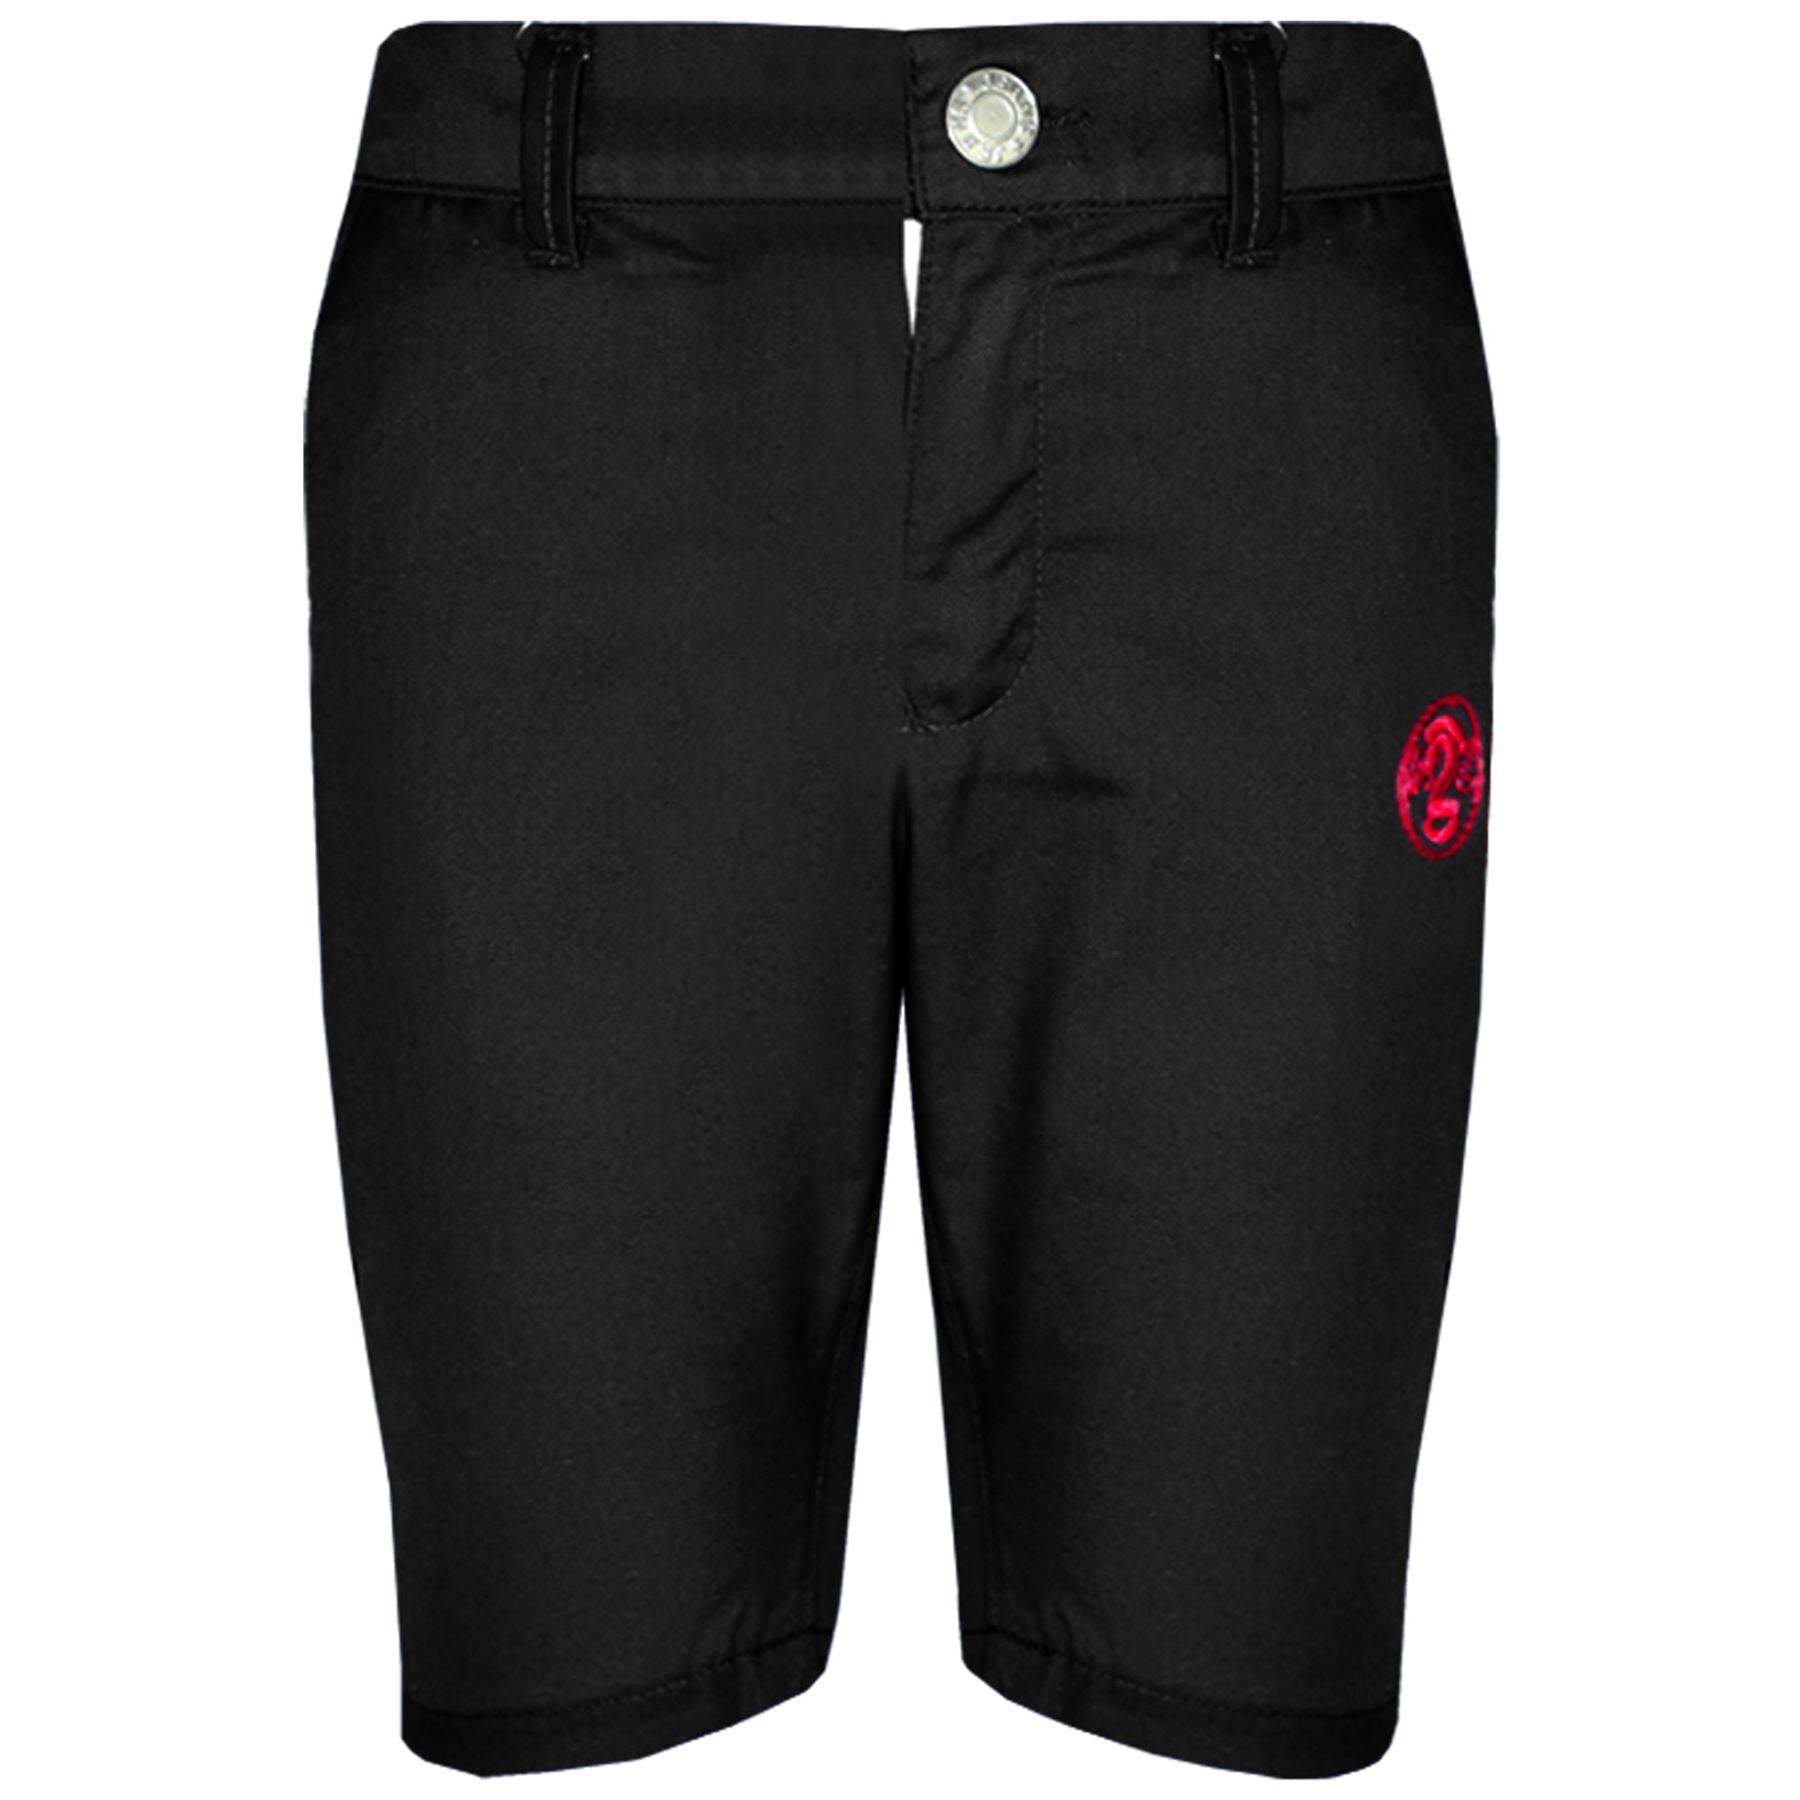 Boys Summer Cotton Shorts Black Chino Knee Length